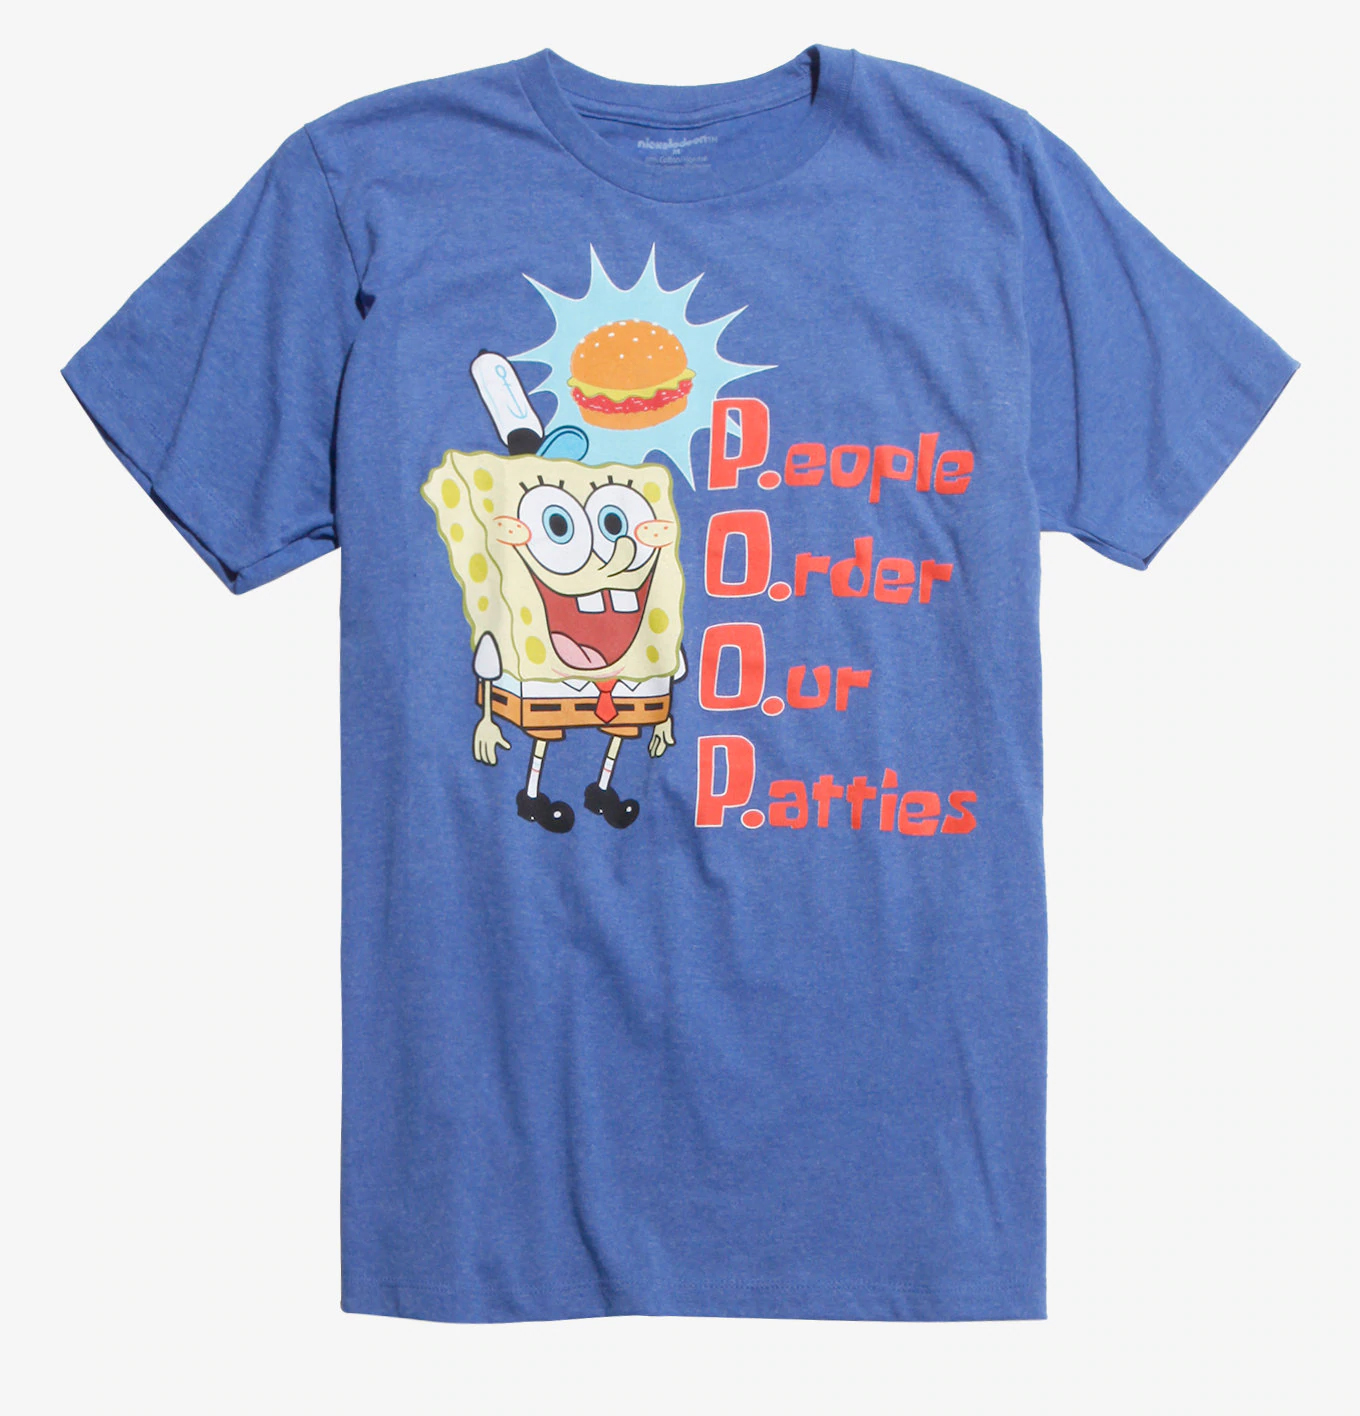 SpongeBob SquarePants P O O P T Shirt (BSM)